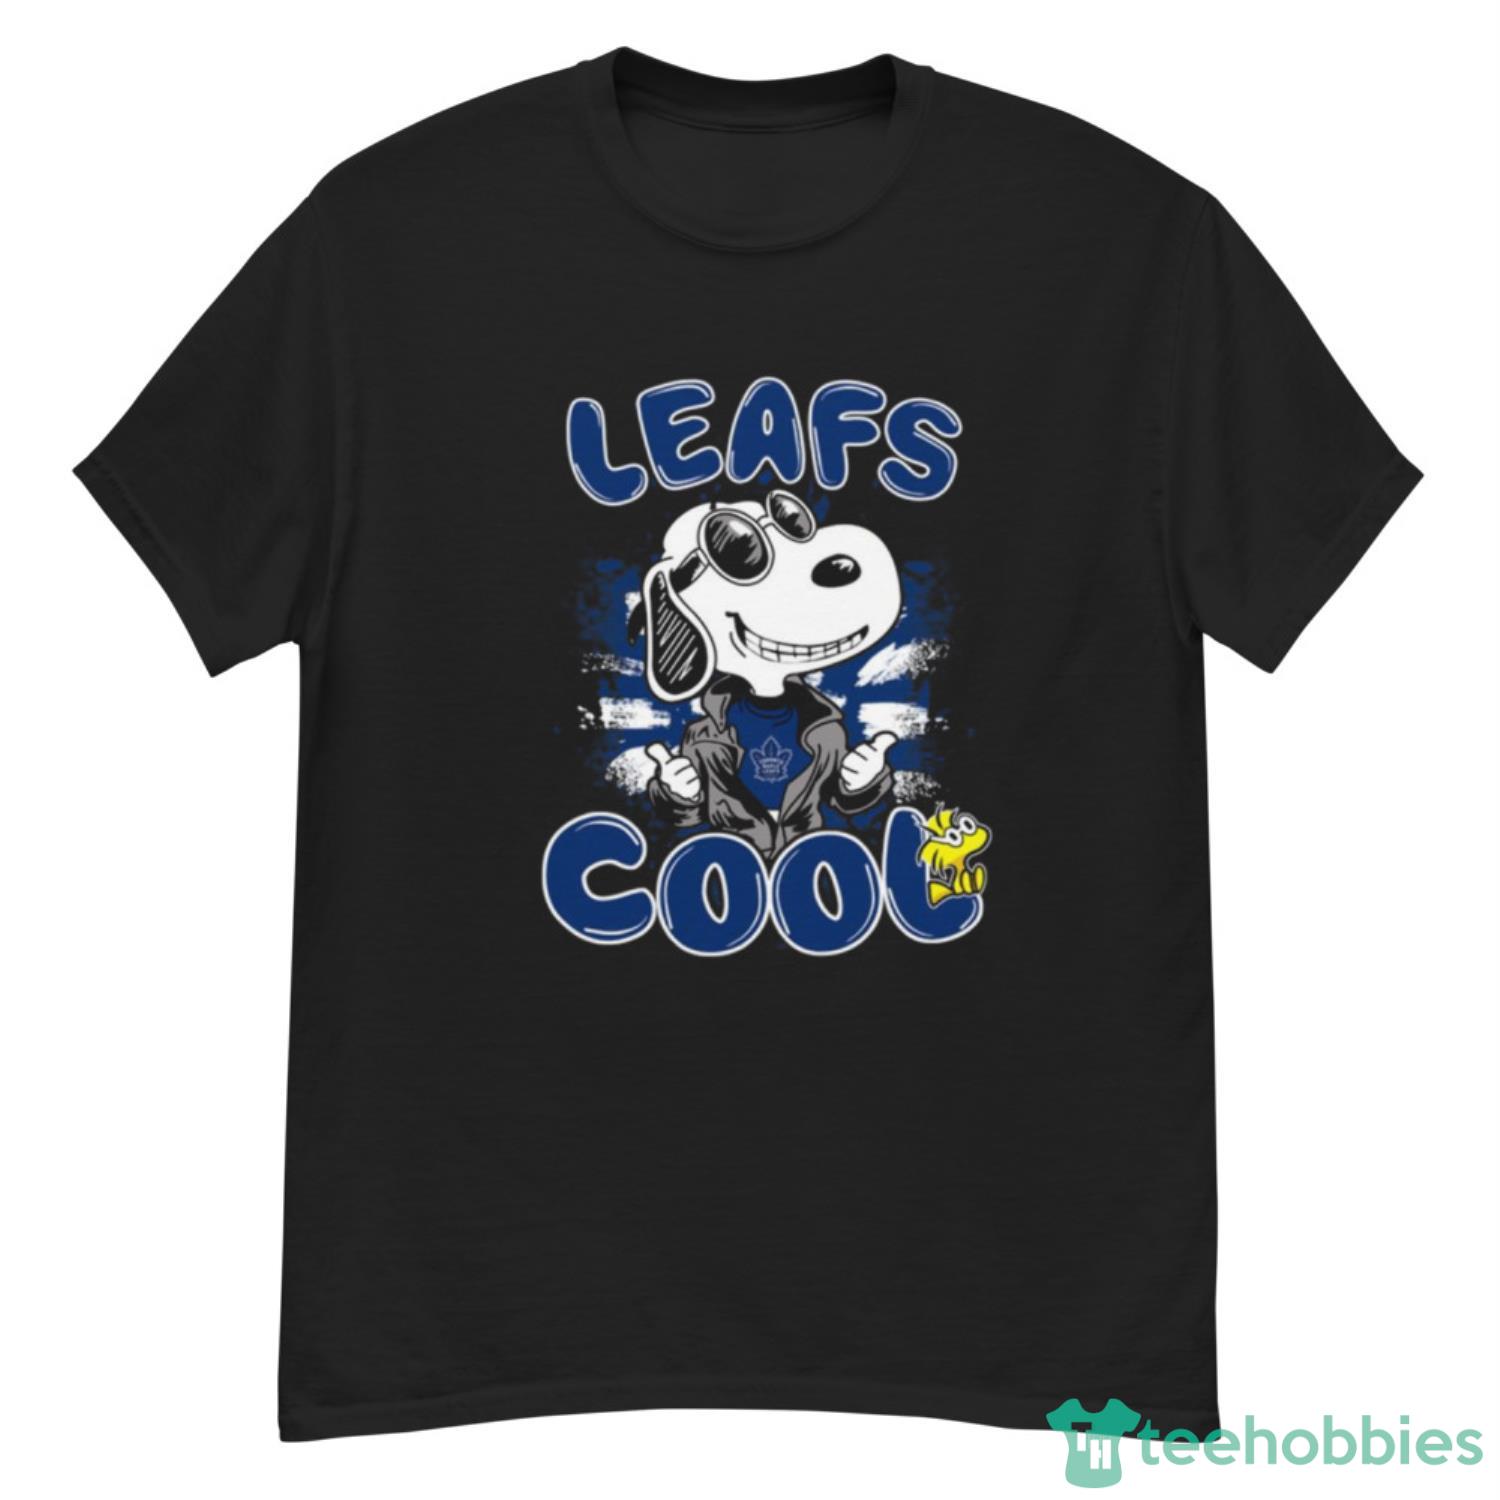 NHL Hockey Toronto Maple Leafs Cool Snoopy Shirt T Shirt - G500 Men’s Classic T-Shirt